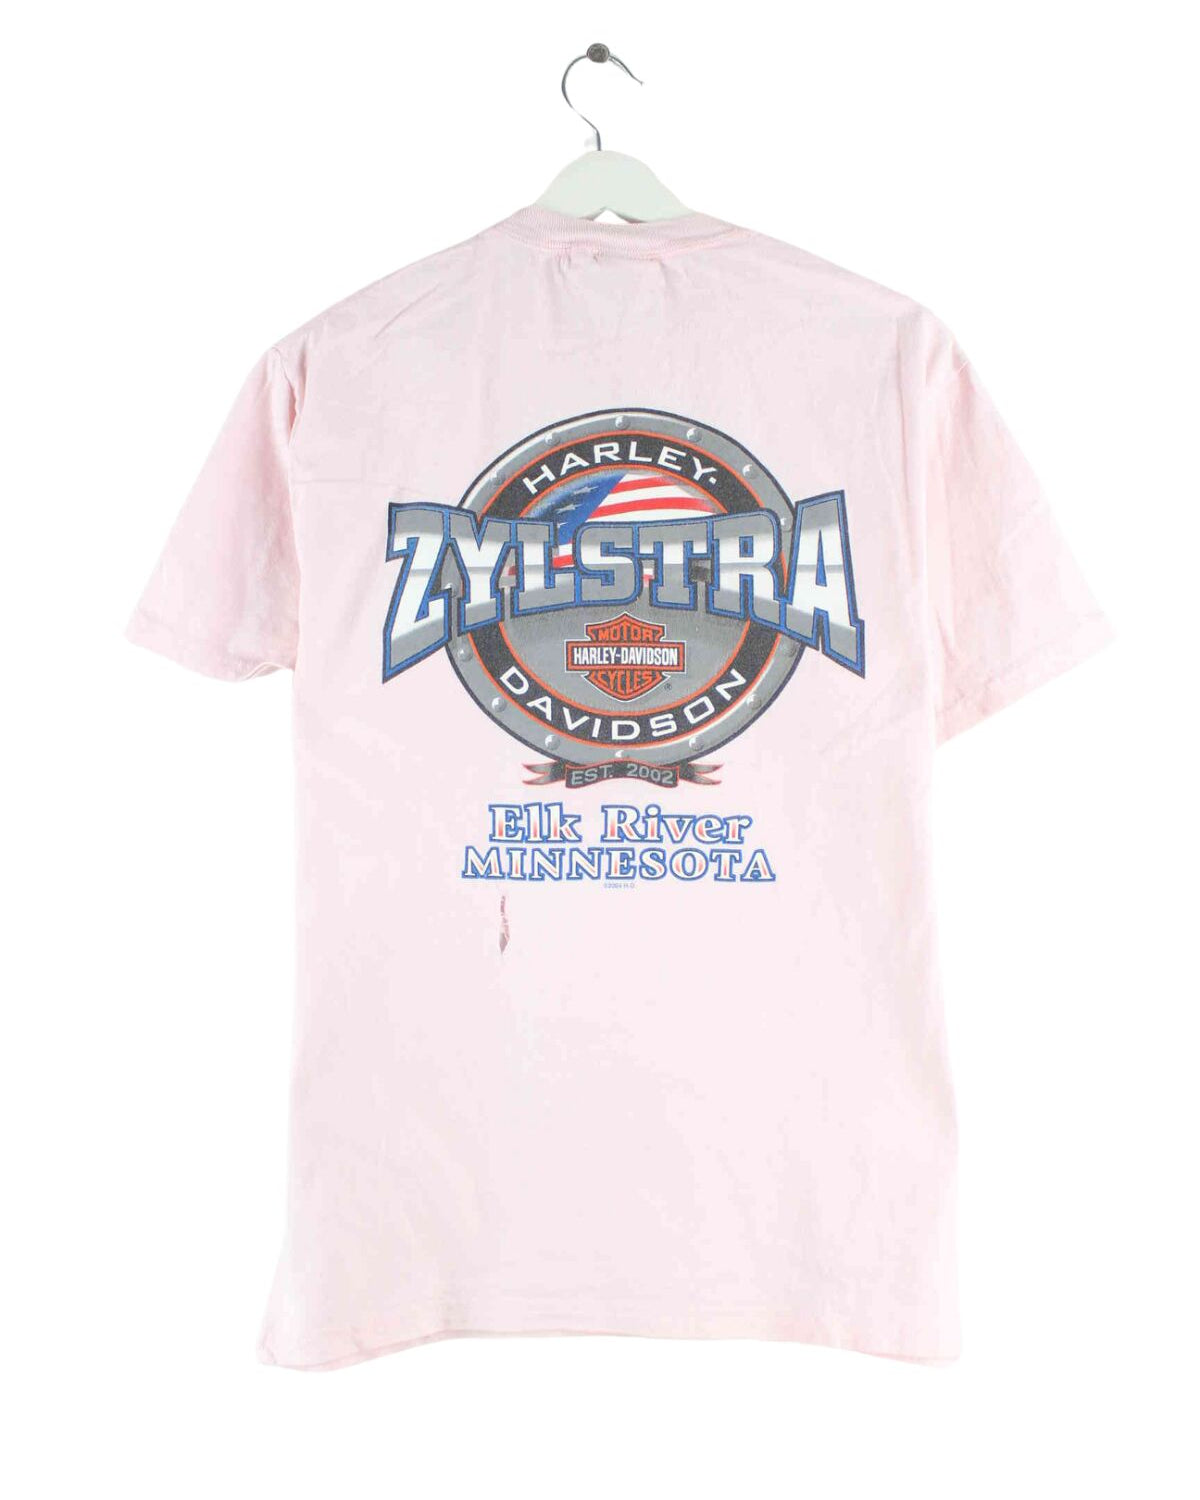 Harley Davidson 2004 Minnesota Elk River Print T-Shirt Rosa M (back image)